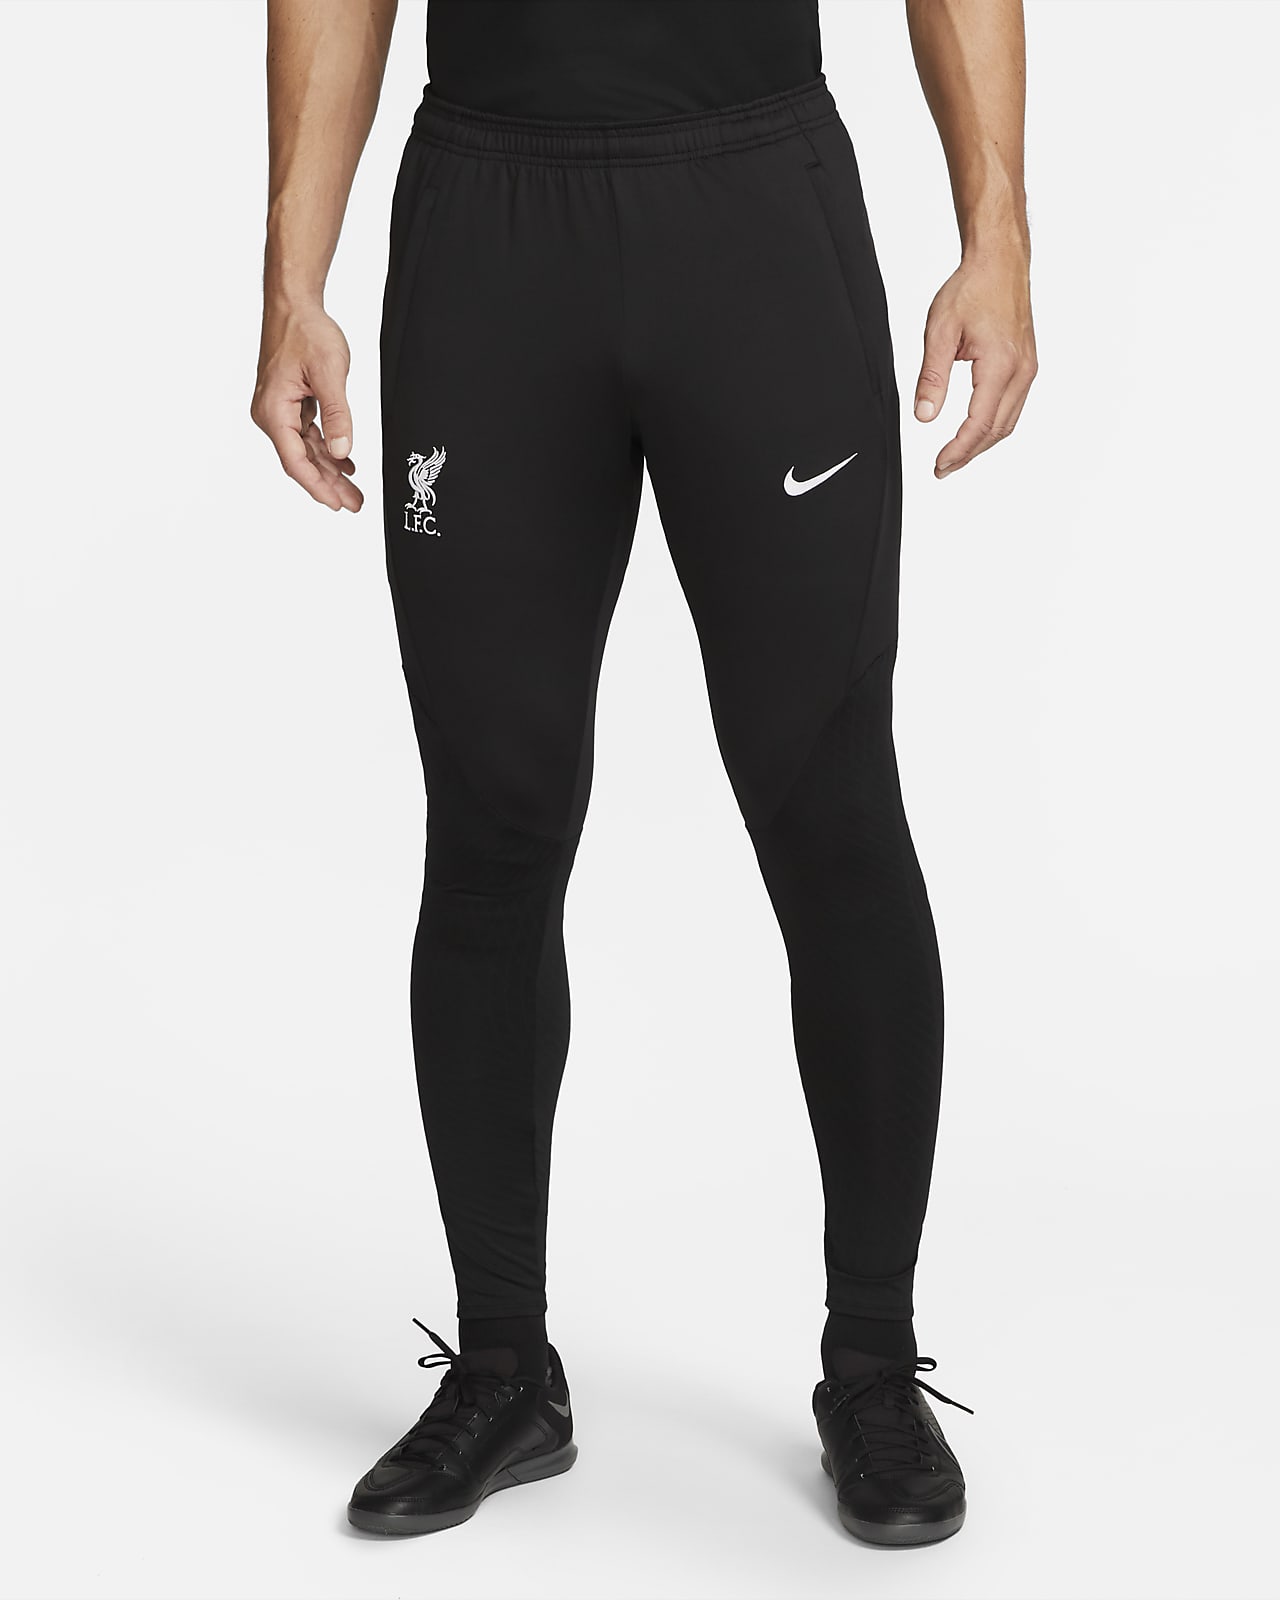 Soccer Leggings  Soccer leggings, Nike yoga pants, Short yoga pants